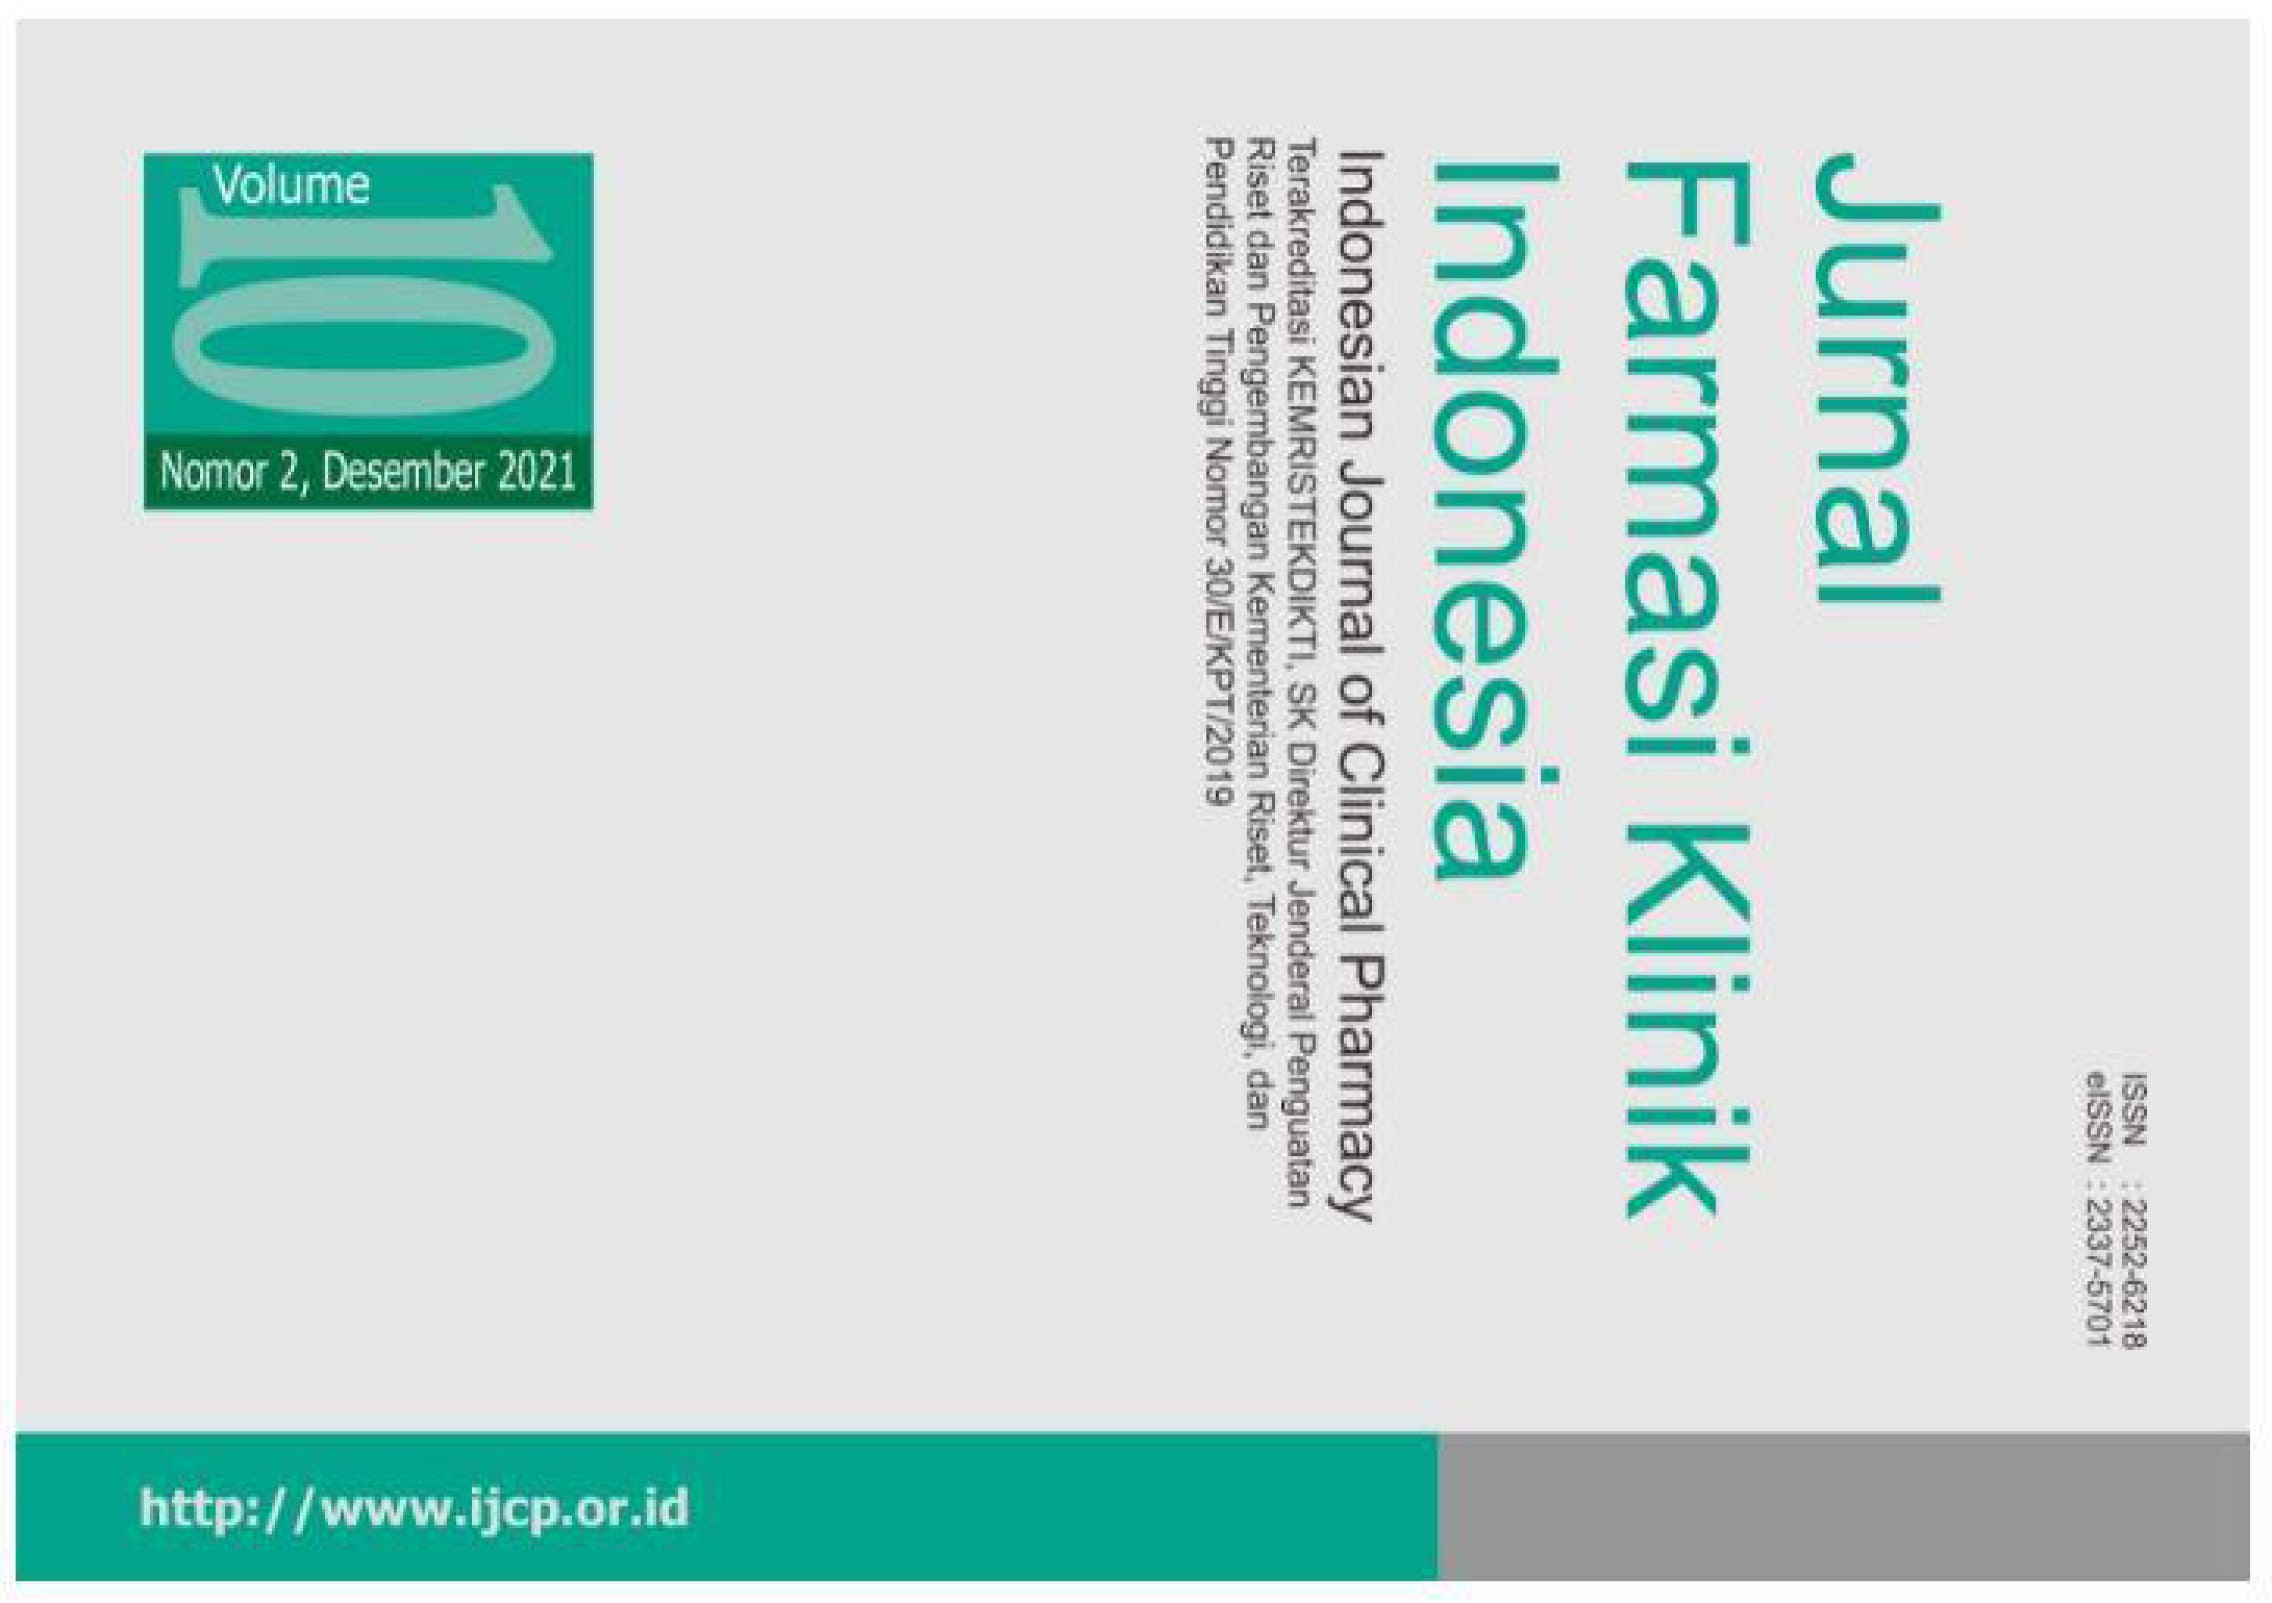 Jurnal Farmasi Klinik Indonesia : Indonesian Journal of Clinical Pharmacy Vol.10 No.2 2021